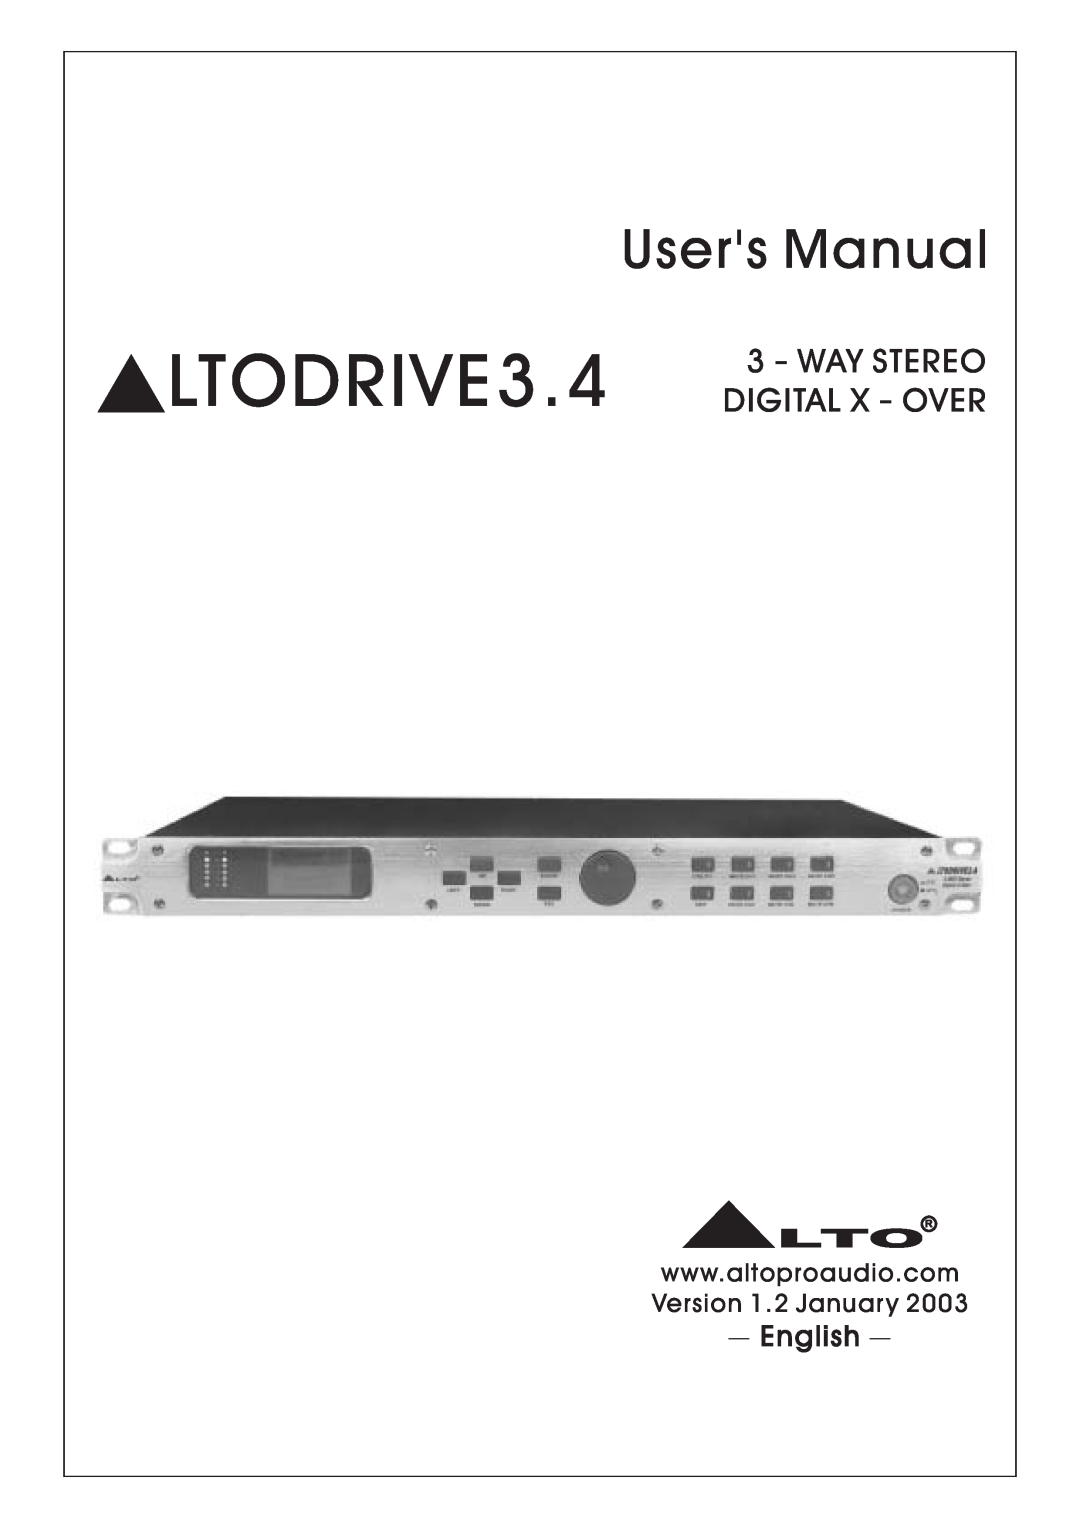 Nilfisk-ALTO DIGITAL X OVER user manual LTODRIVE3.4, Digital, Over, Way Stereo, English, Version 1.2 Januar y 